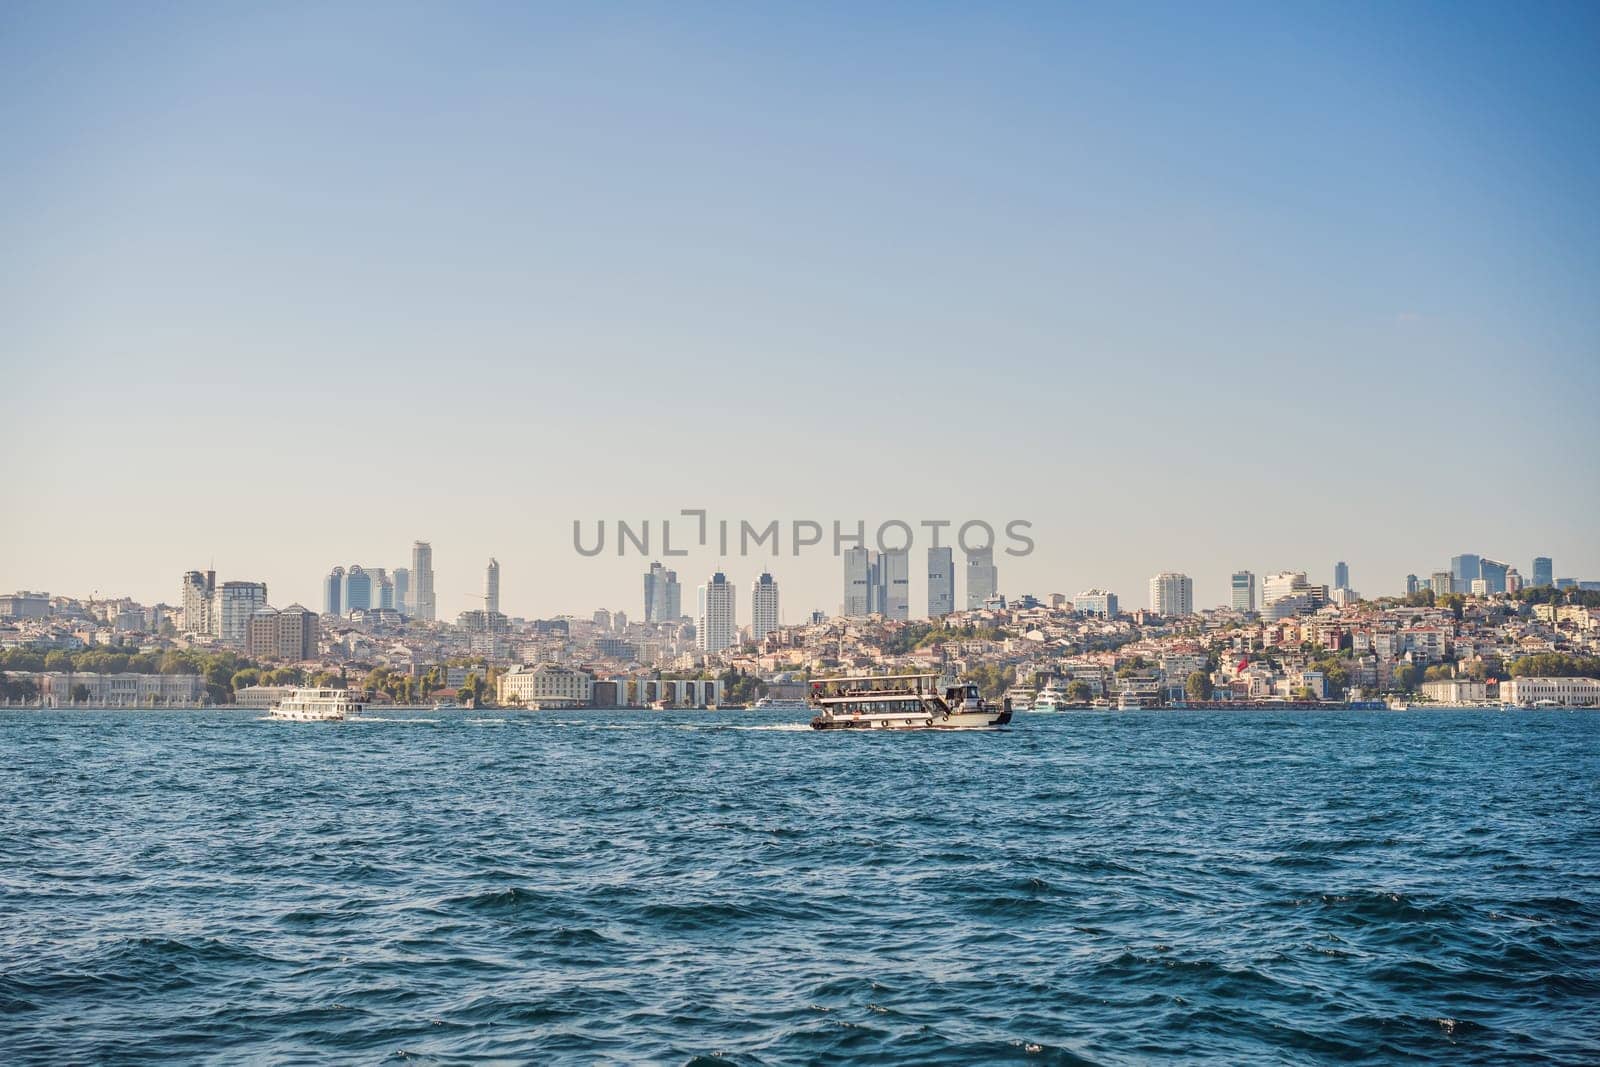 Muslim architecture and water transport in Turkey - Beautiful View touristic landmarks from sea voyage on Bosphorus by galitskaya